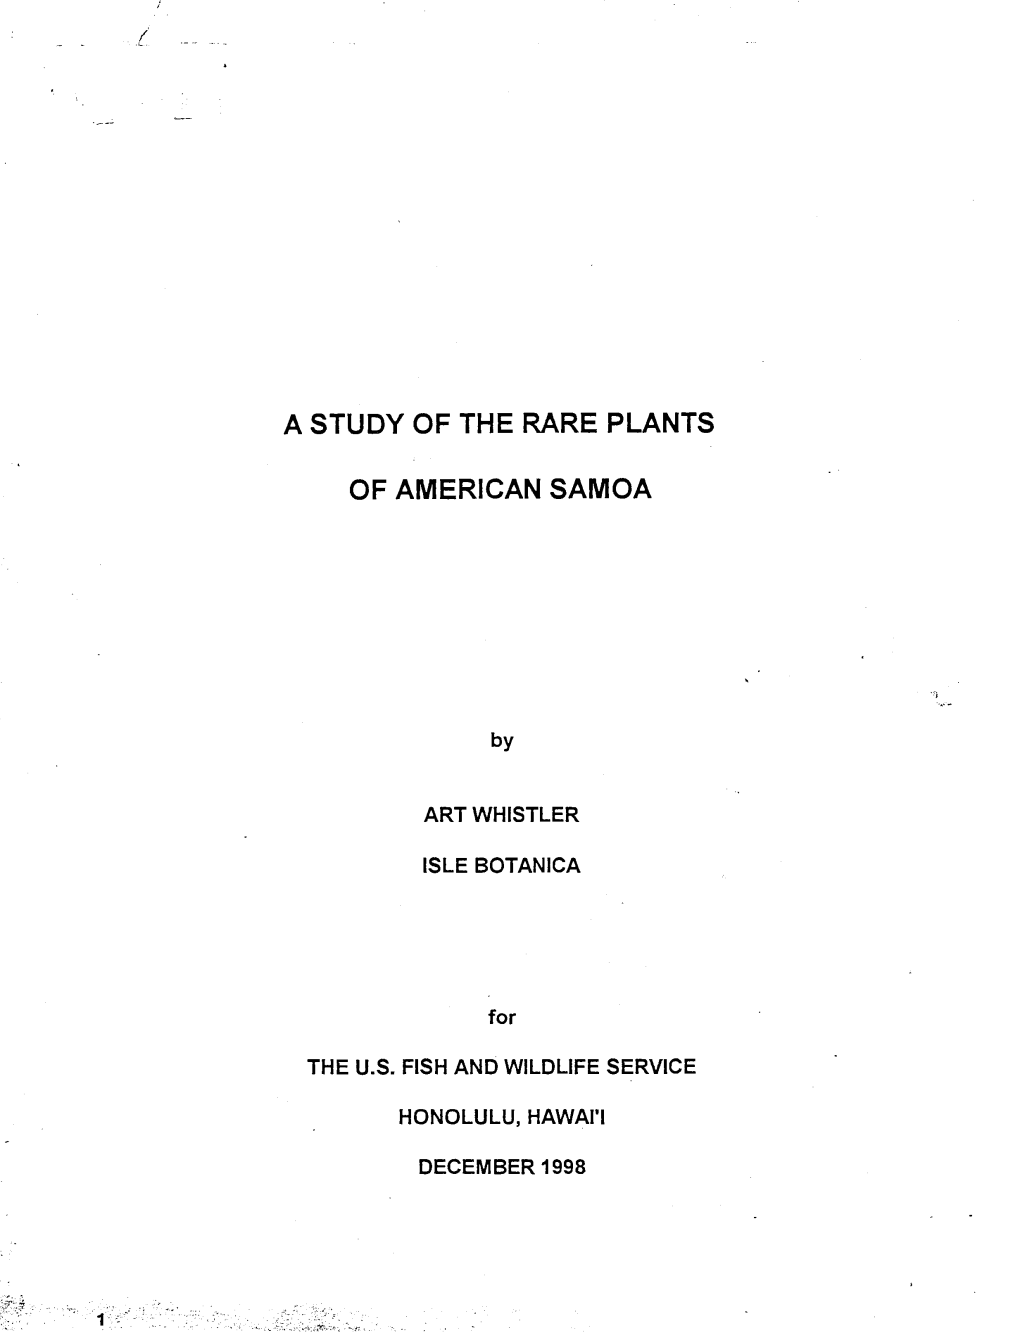 A Study of the Rare Plants of American Samoa